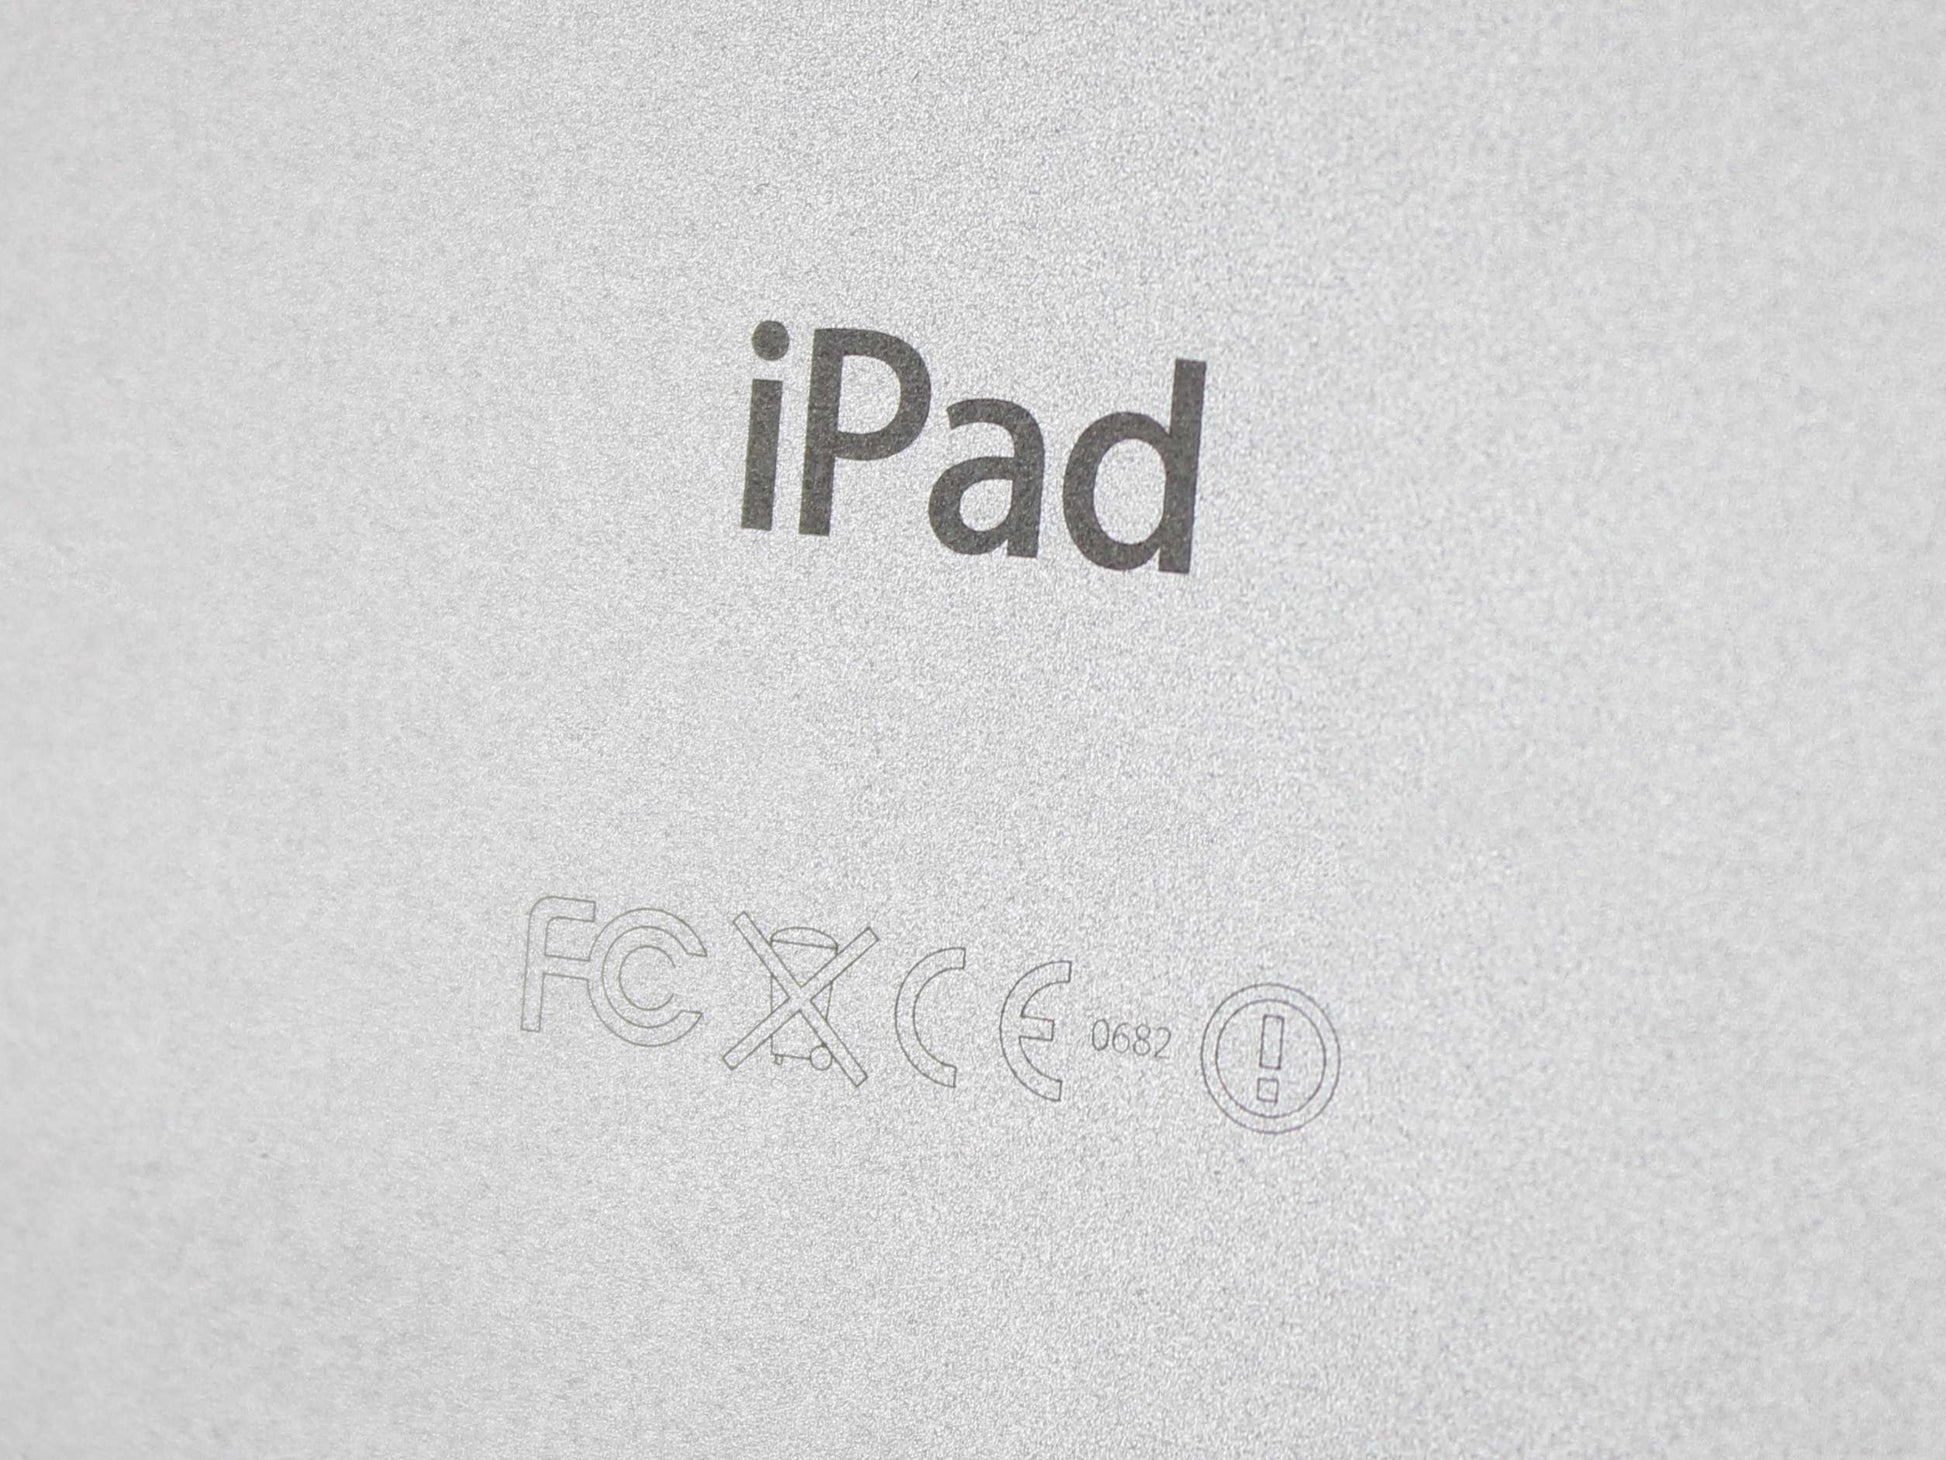 Apple iPad Air with Wi-Fi 32GB MD789LL/B - White & Silver